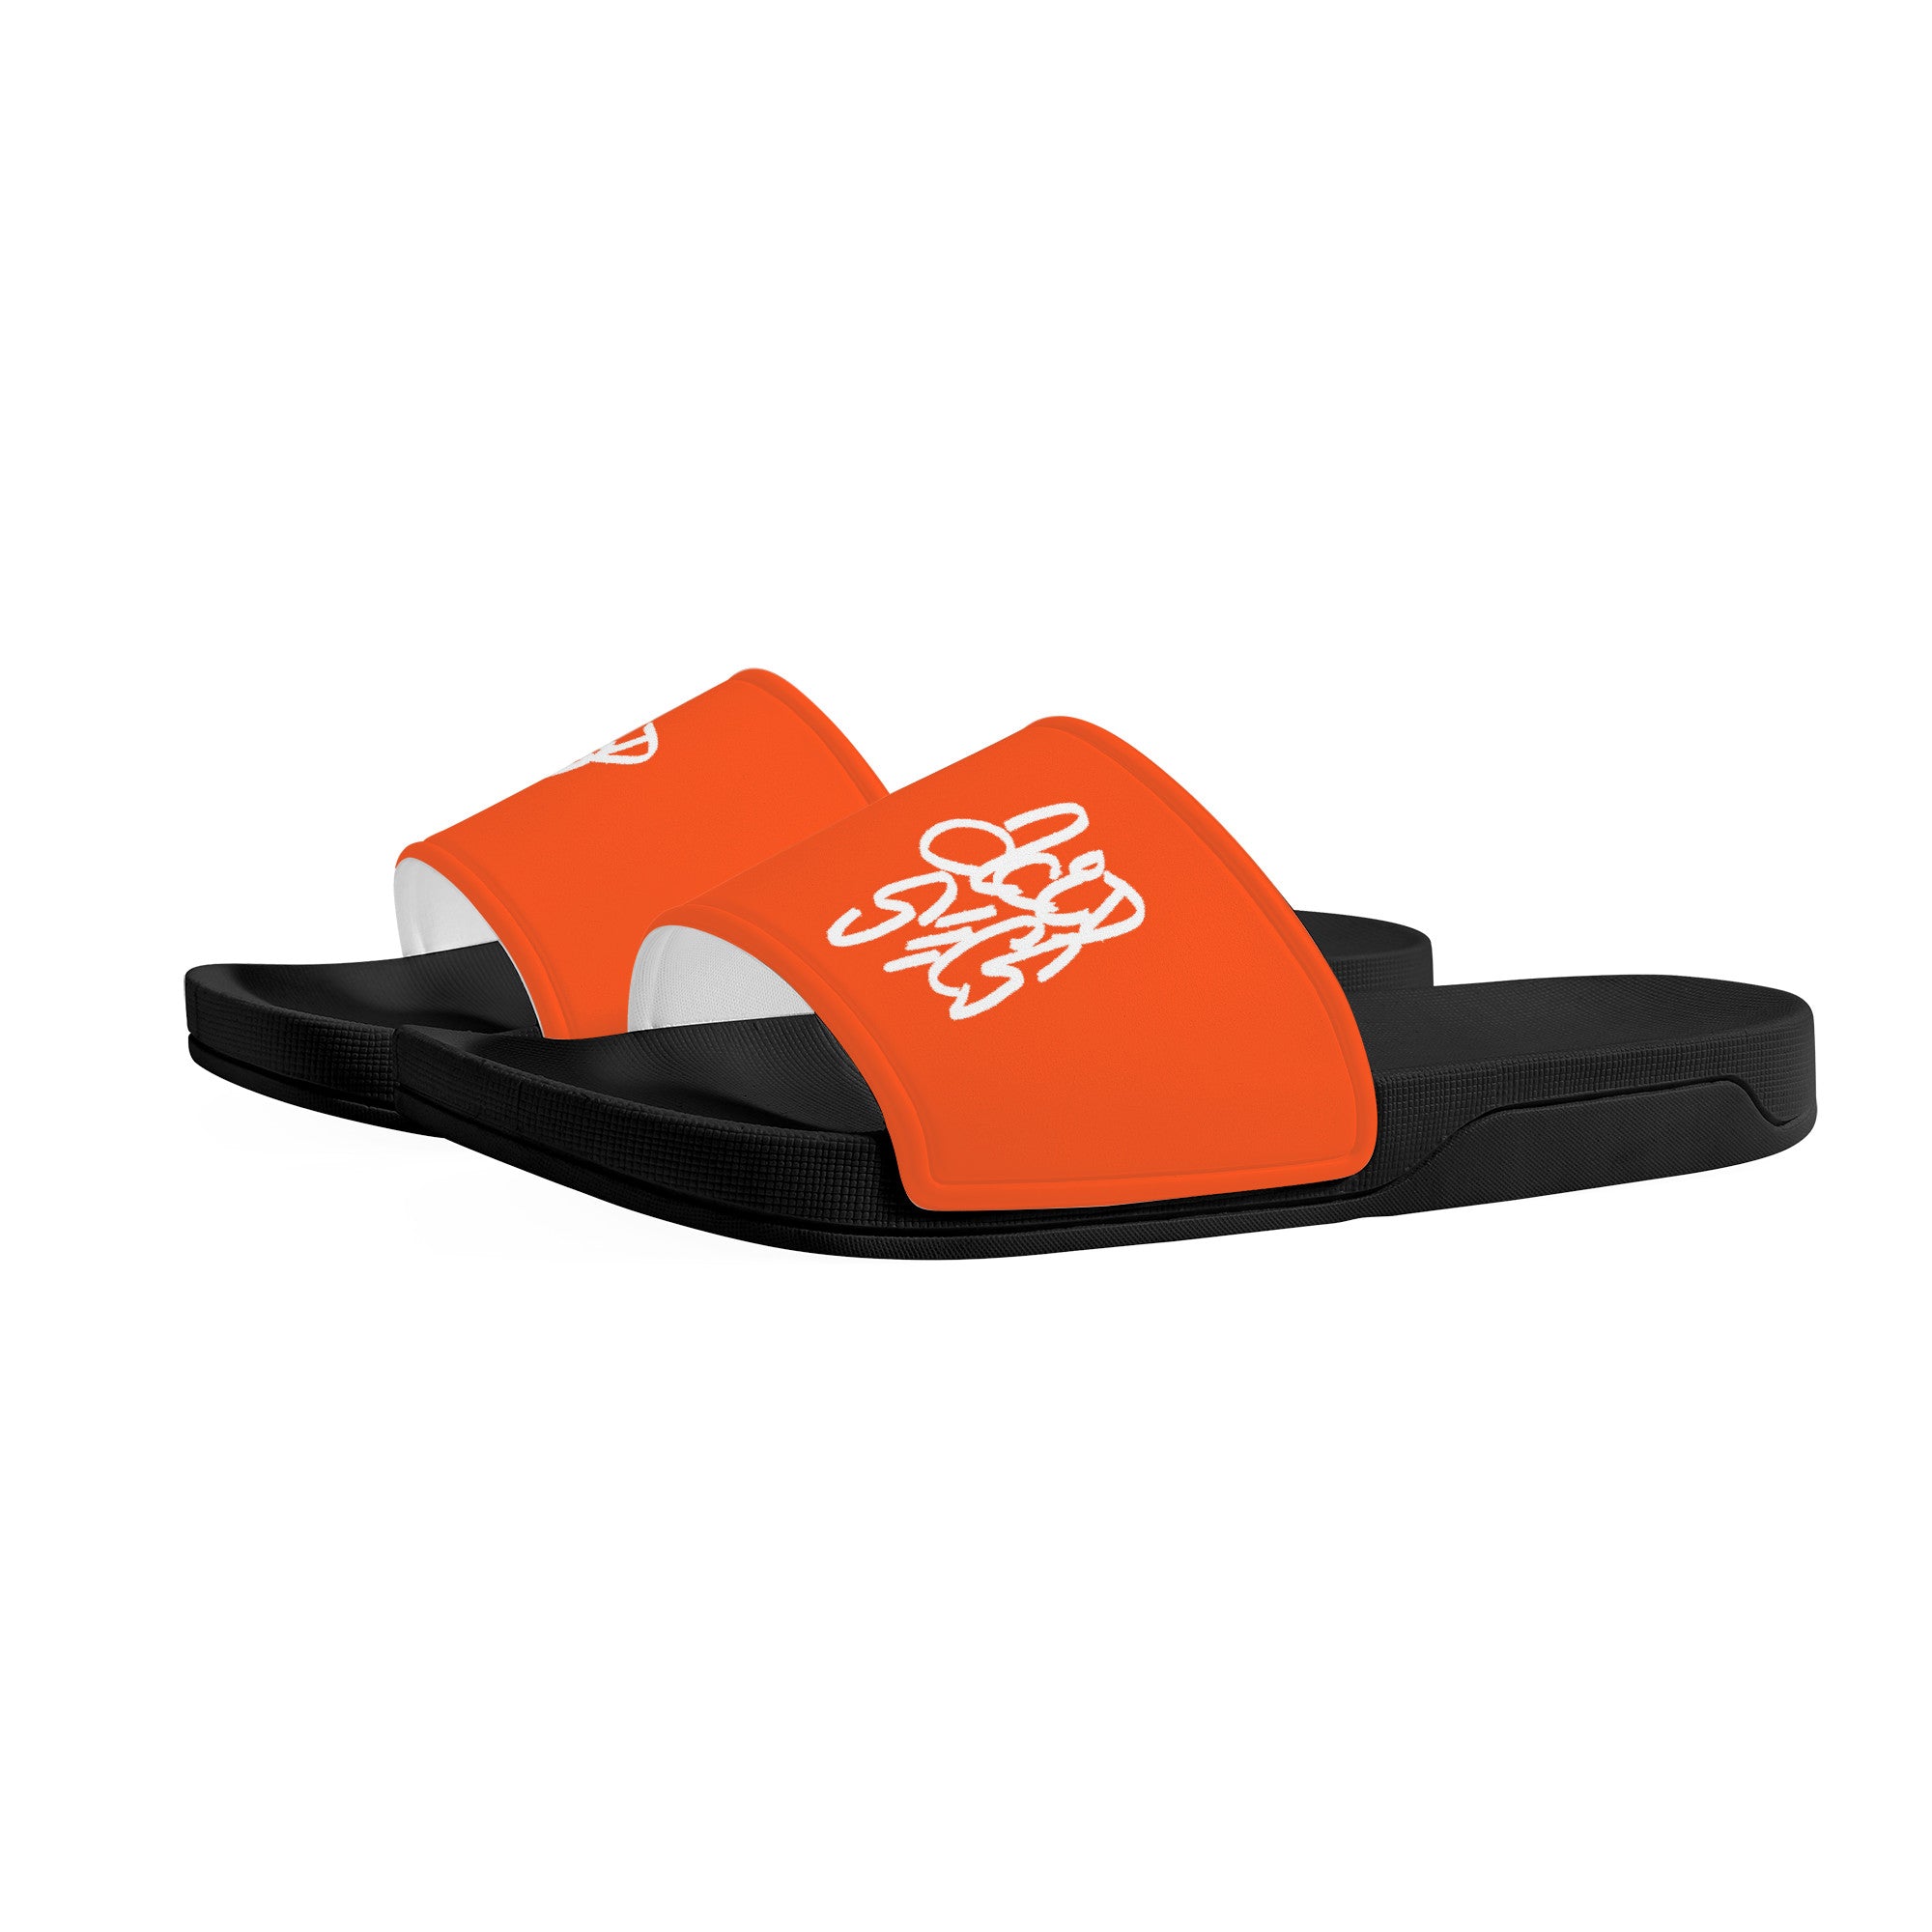 Acid Secs Slide Sandals - Orange